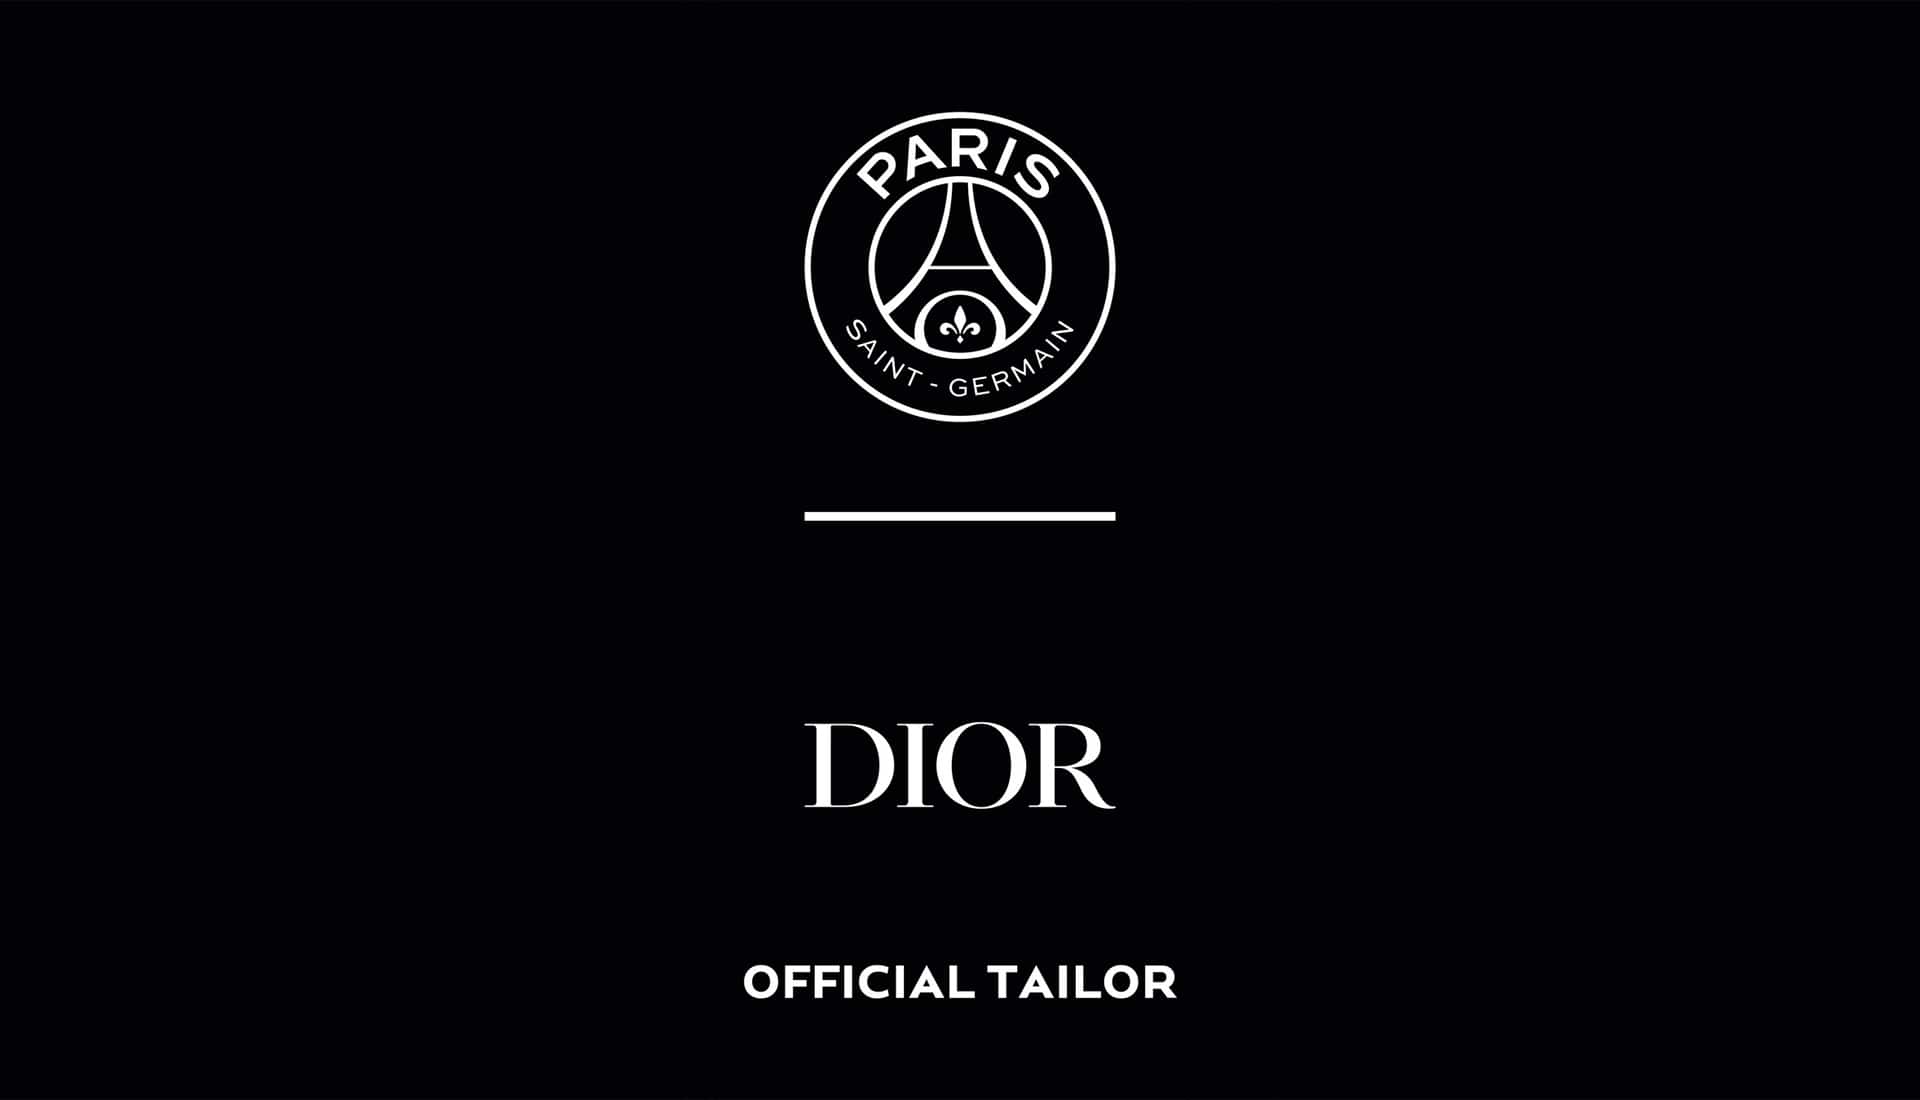 Dior Designs Exclusive Collection For Paris Saint-Germain